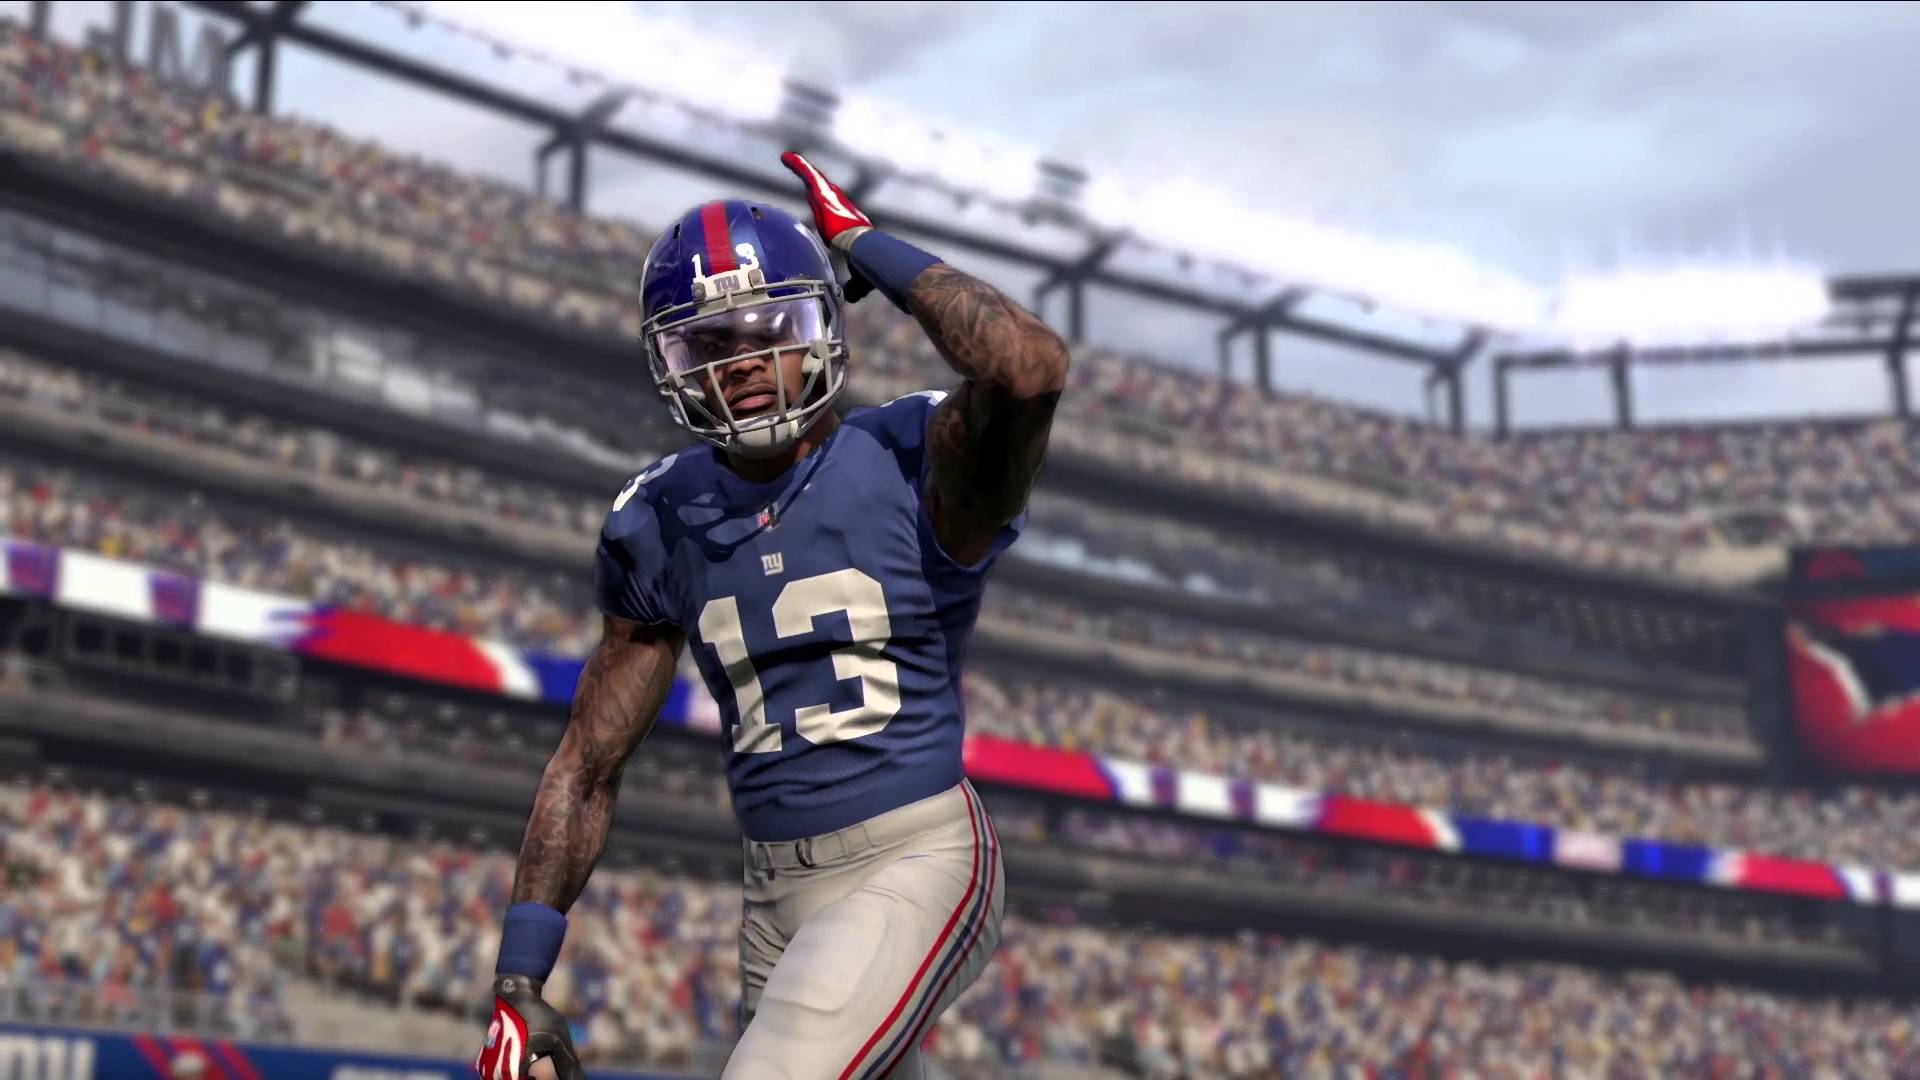 Madden NFL 16 - Official E3 Gameplay Trailer